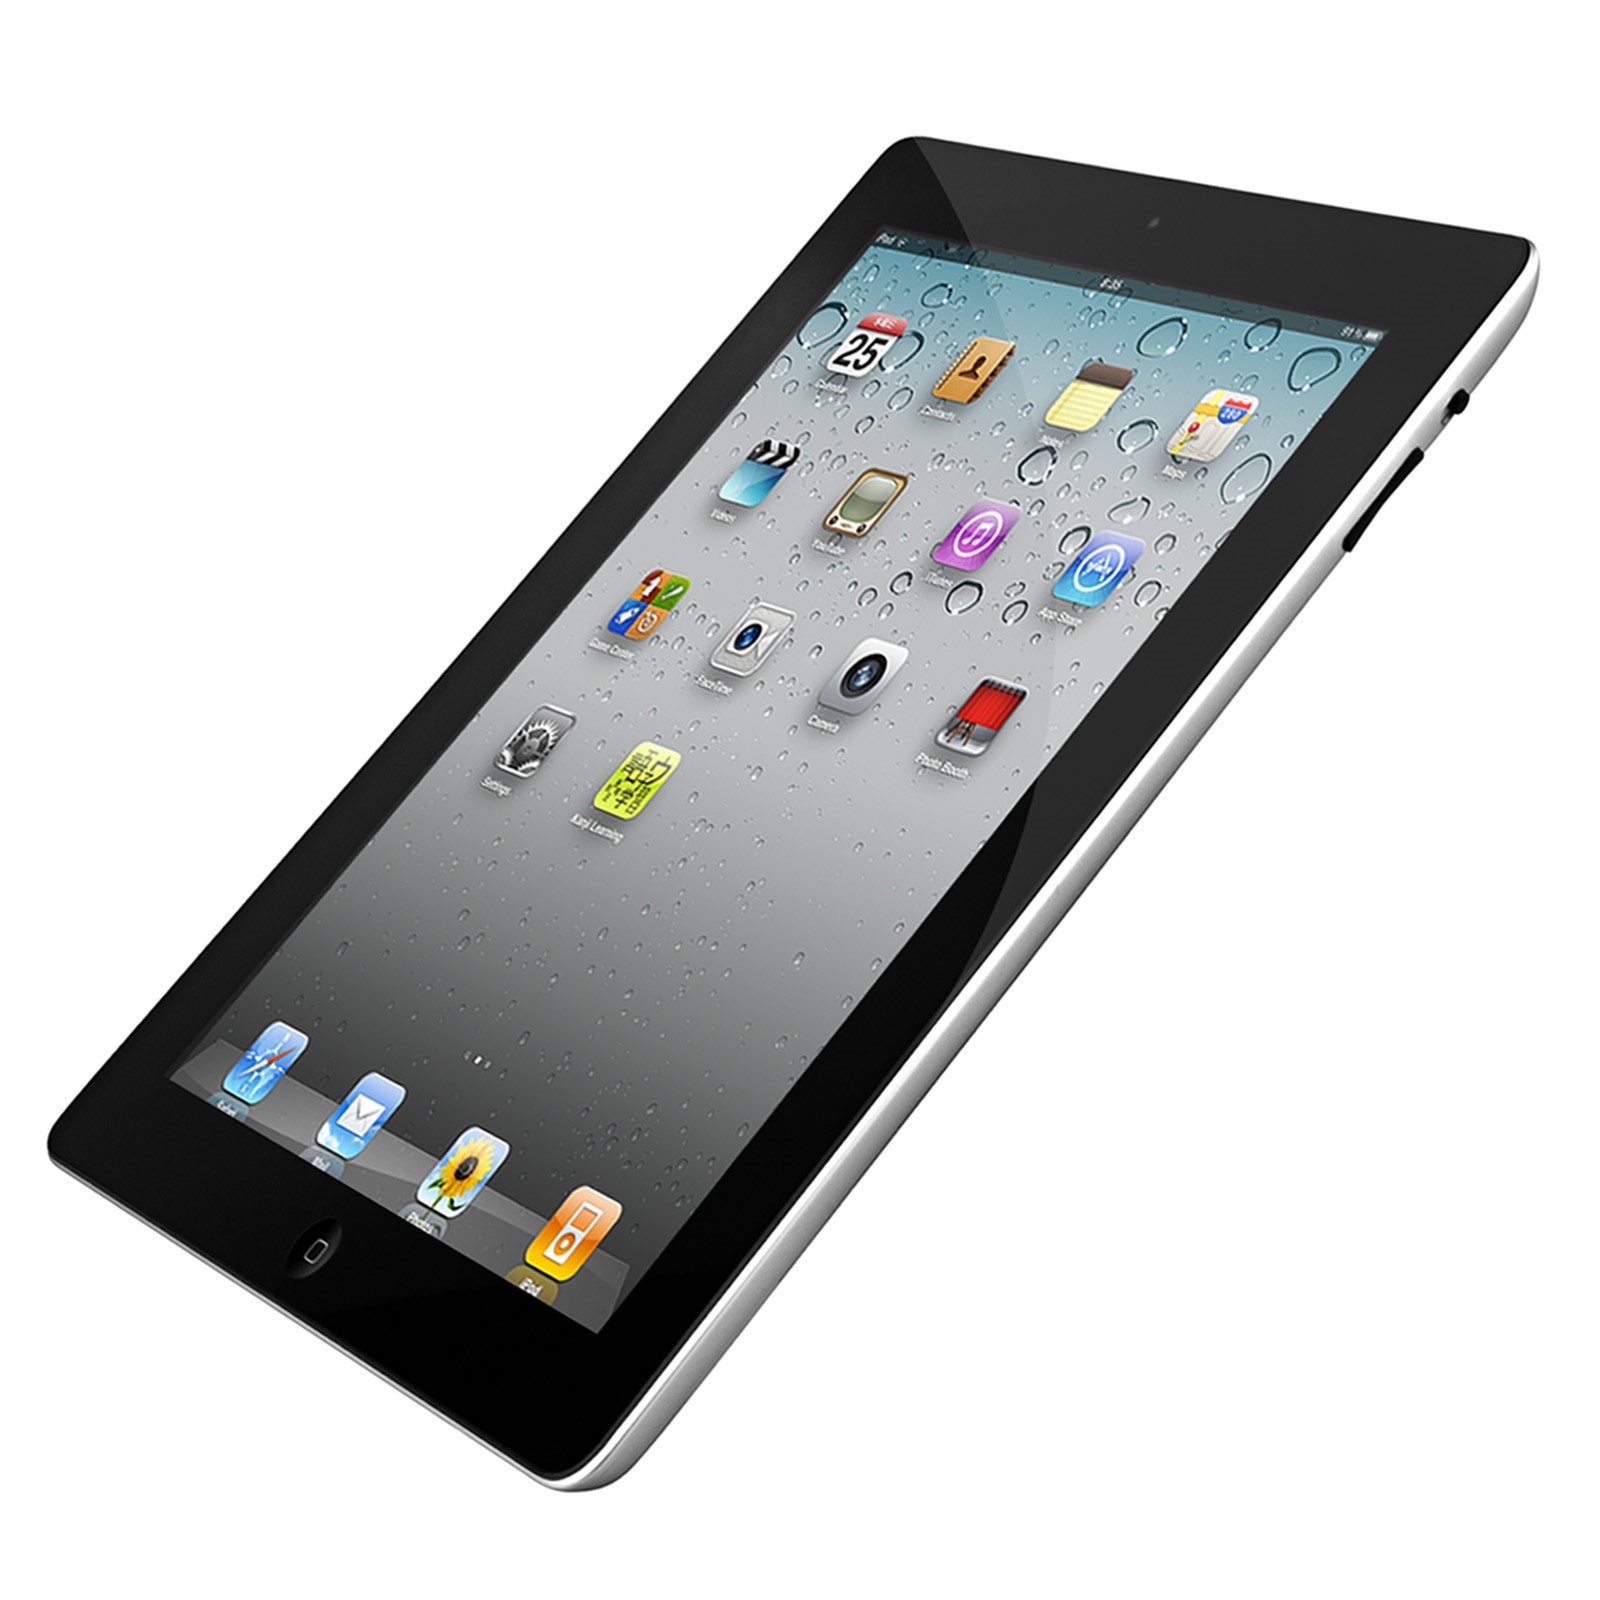 Restored Apple iPad 2 16GB 9.7" Touchscreen Wi-Fi Tablet - Black - MC769LLA (Refurbished) - image 2 of 2